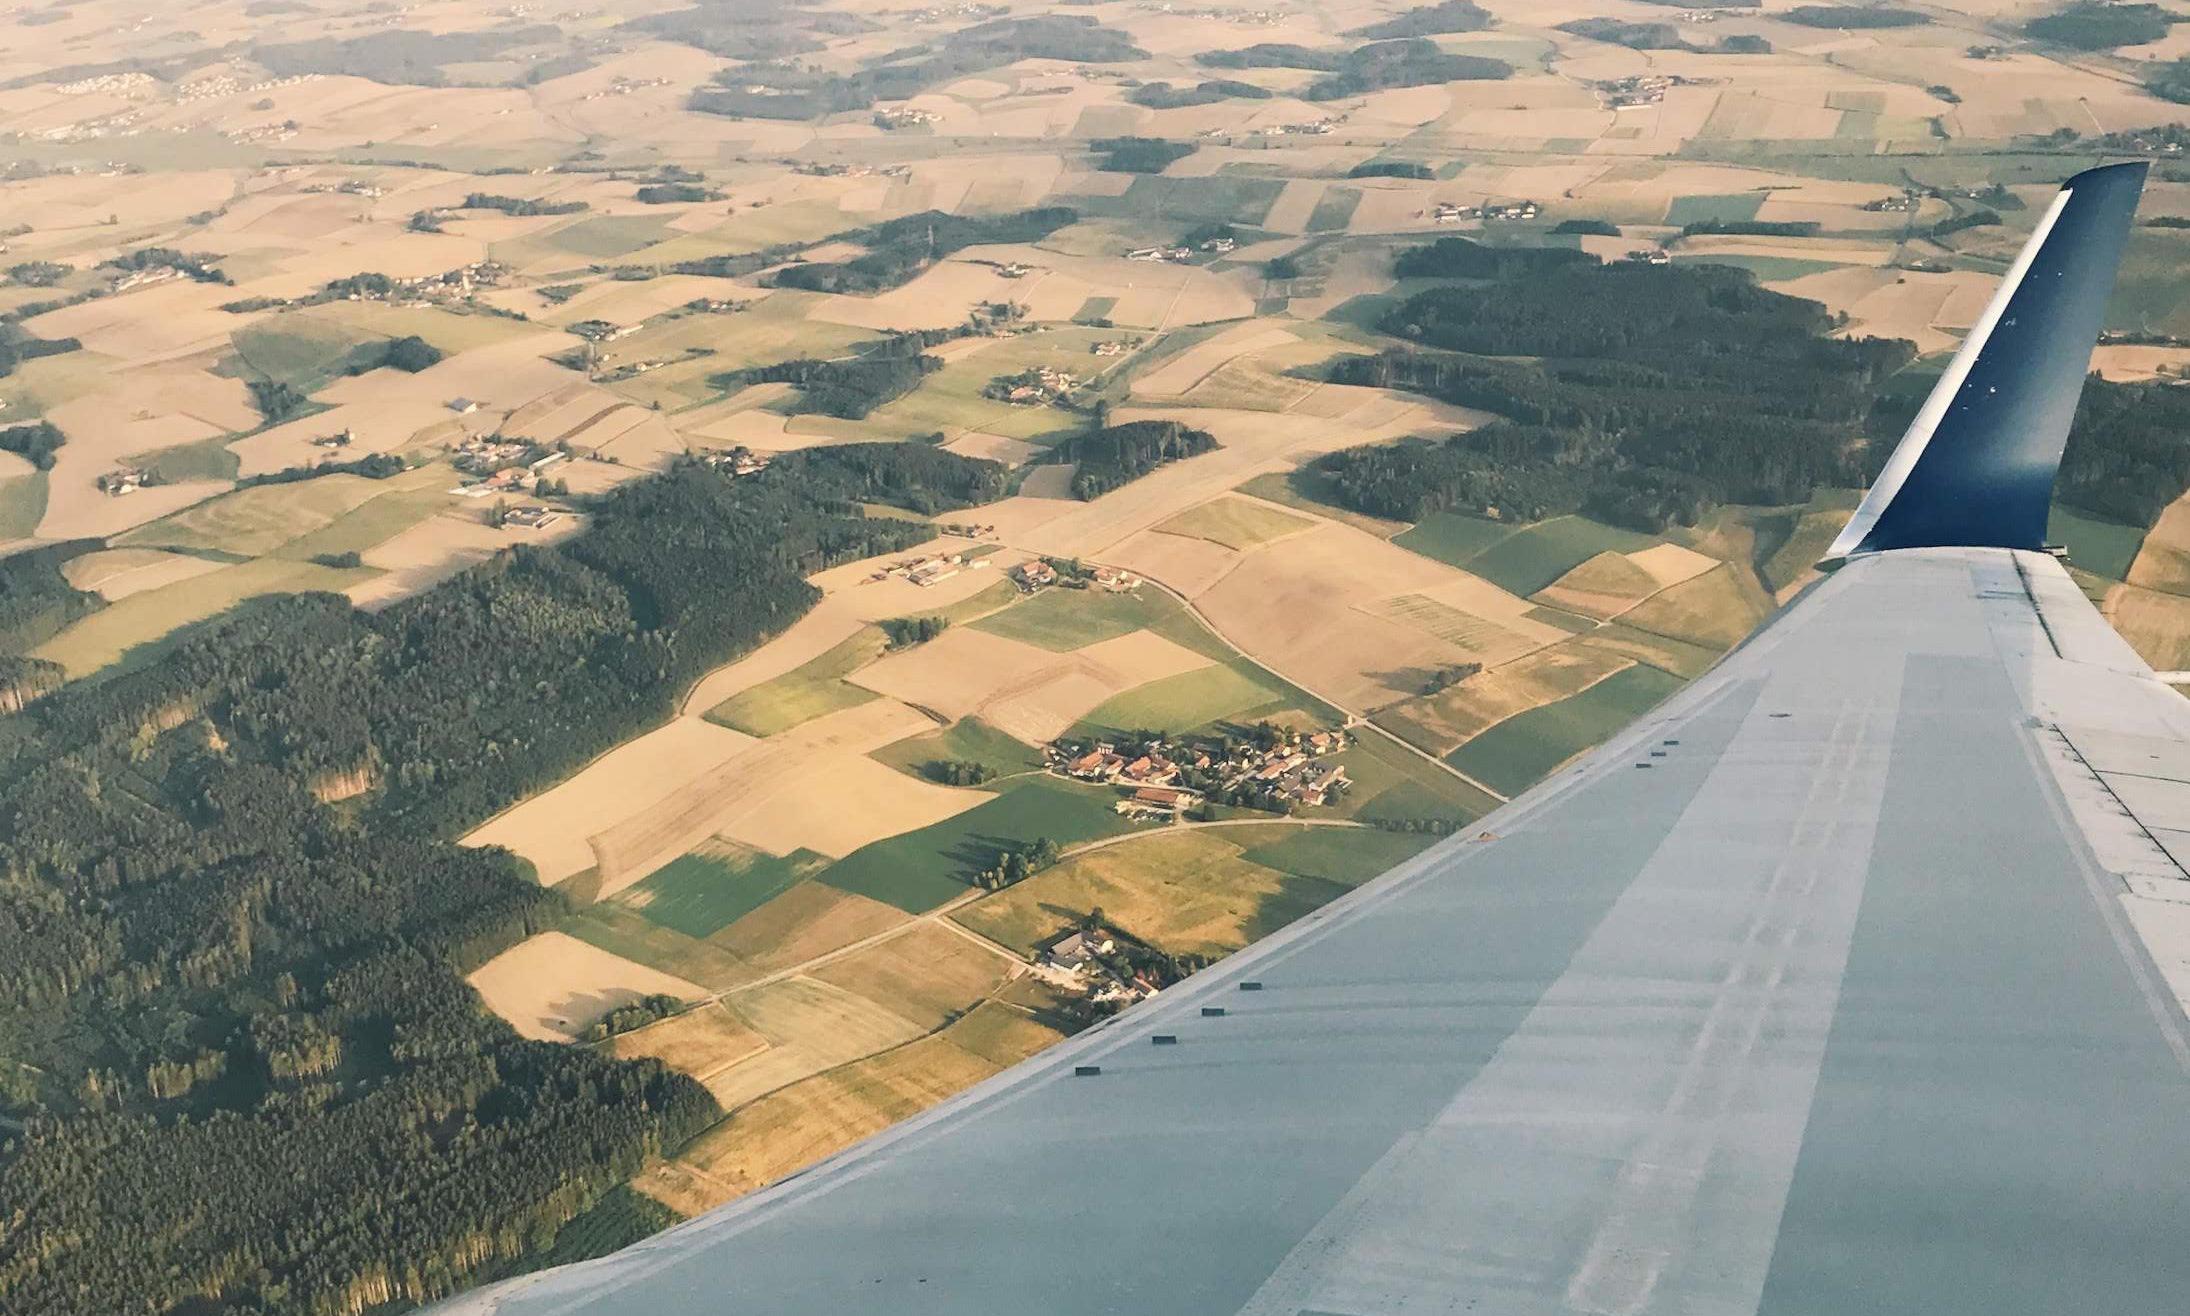 Delta 767 flights over Munich, Germany